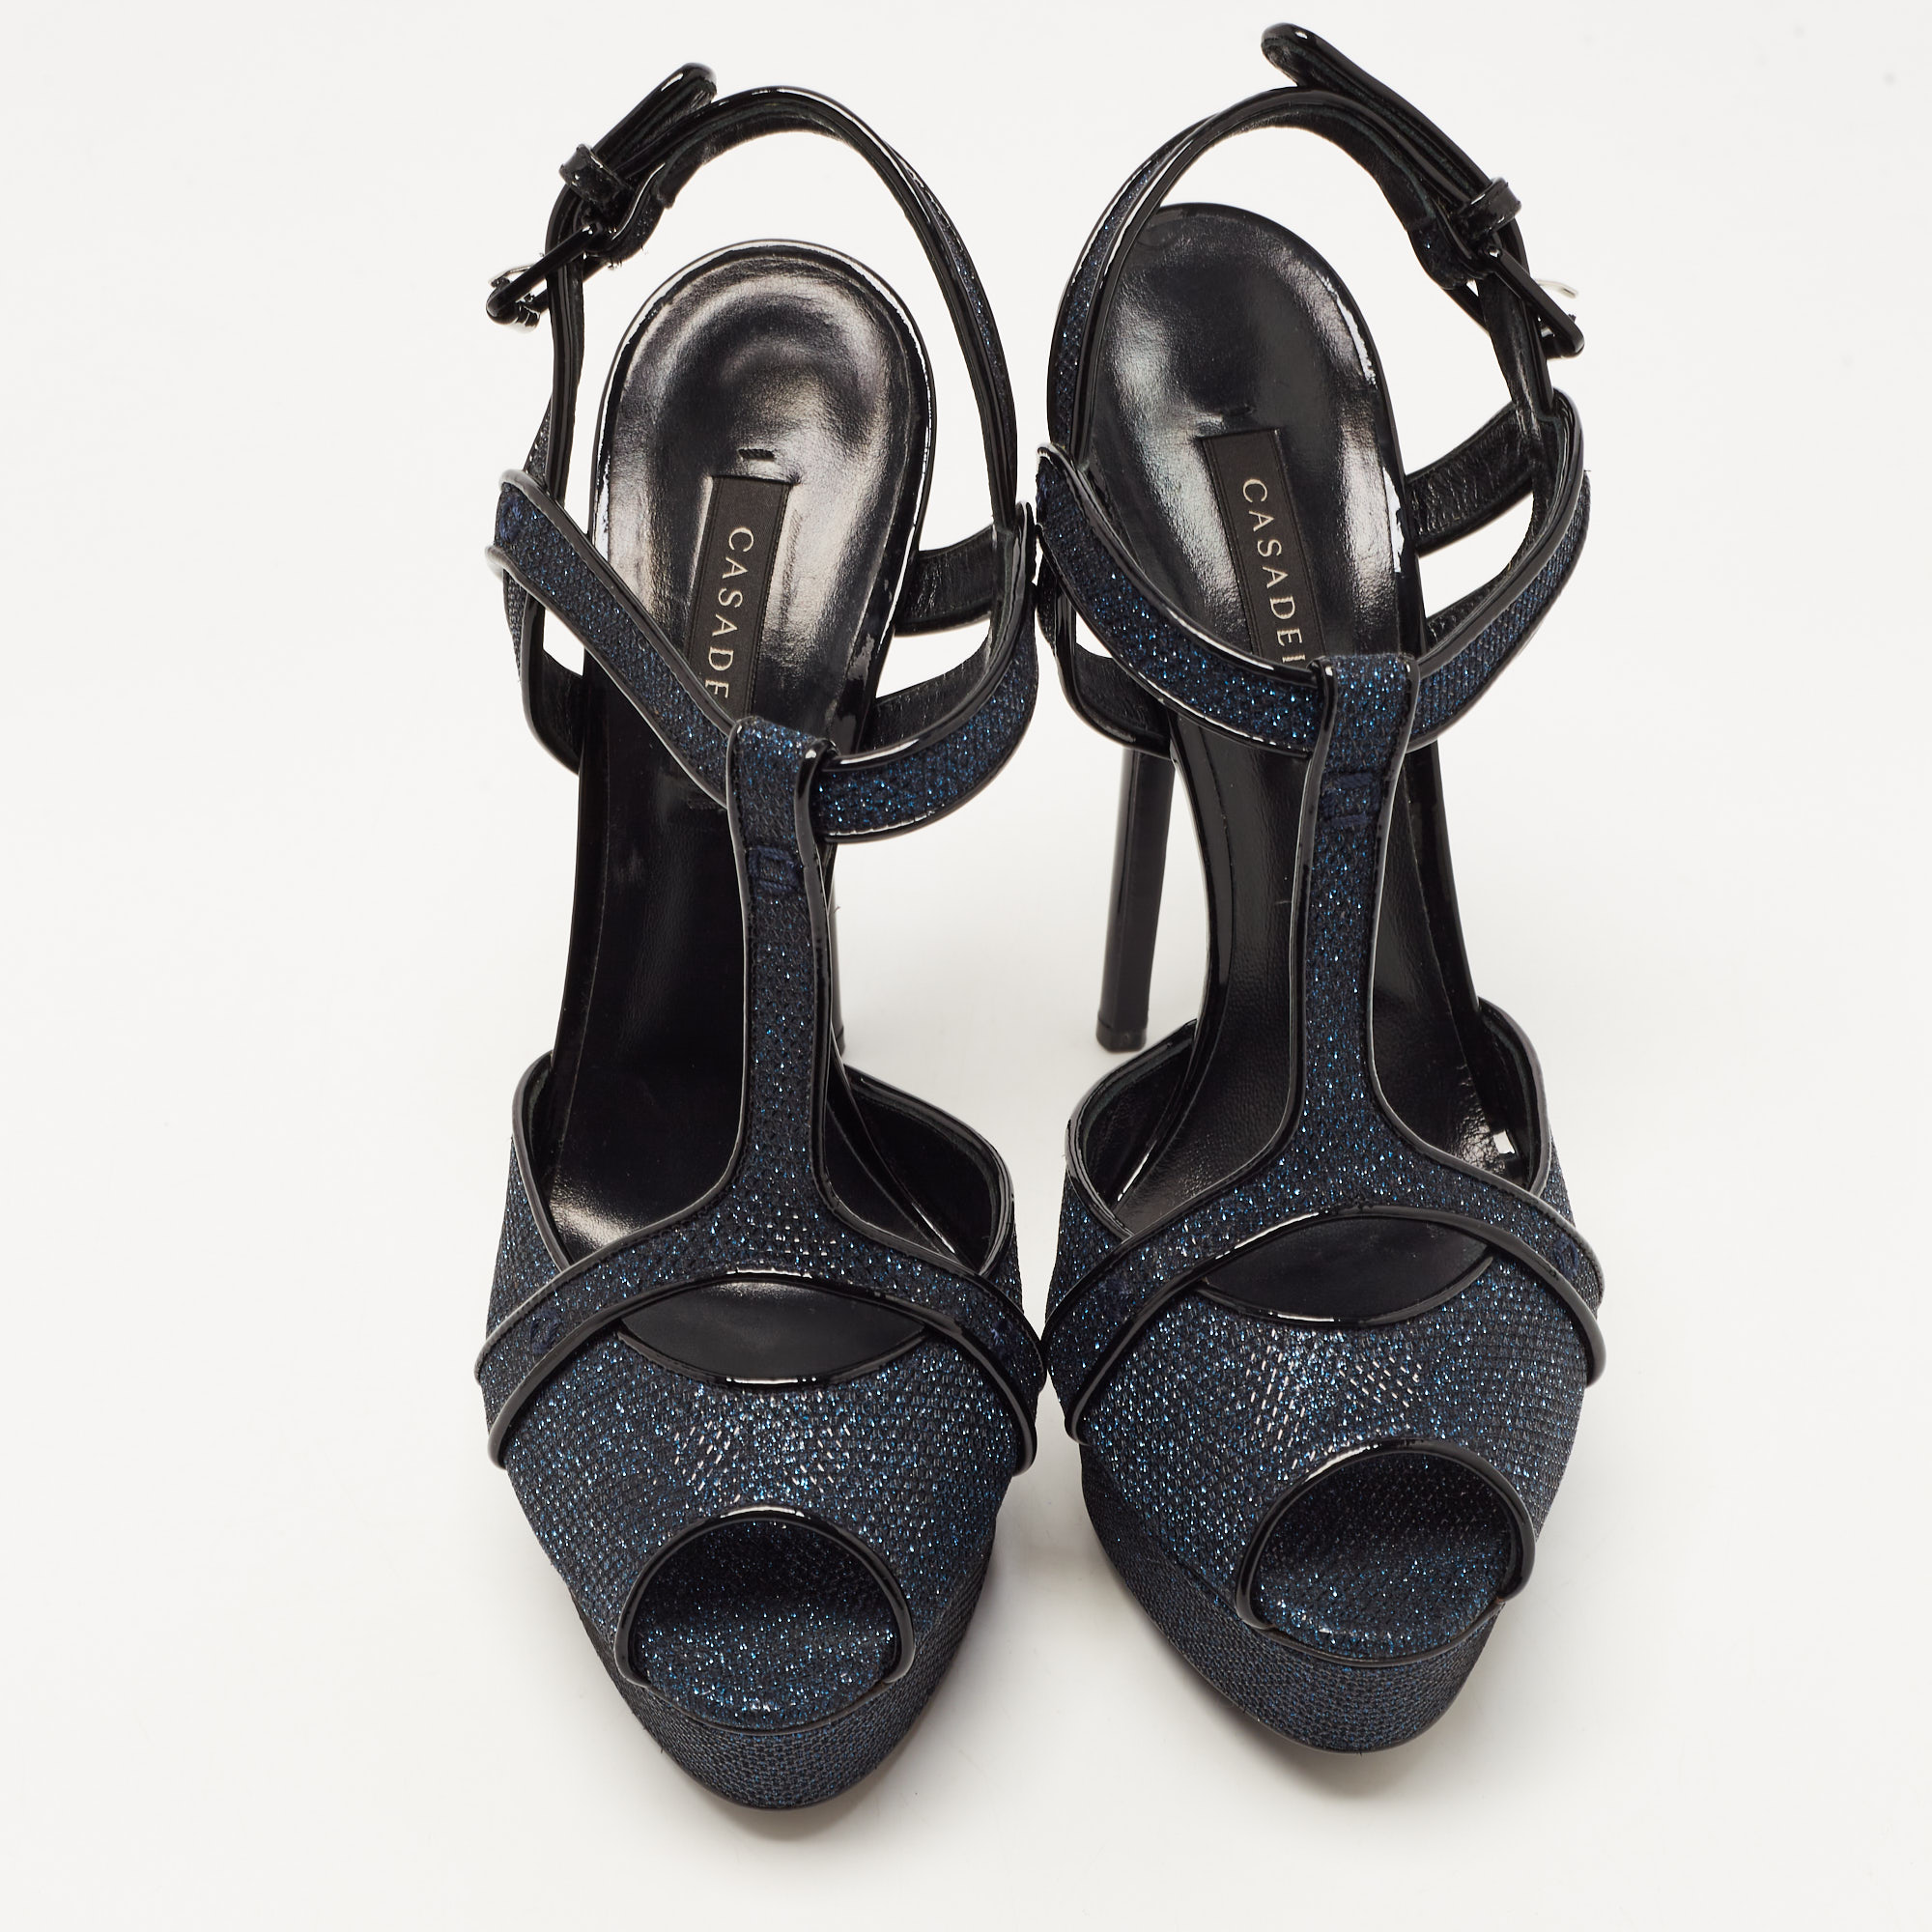 Casadei Blue/Black Glitter Lace And Patent Leather Platform Ankle Strap Sandals Size 40